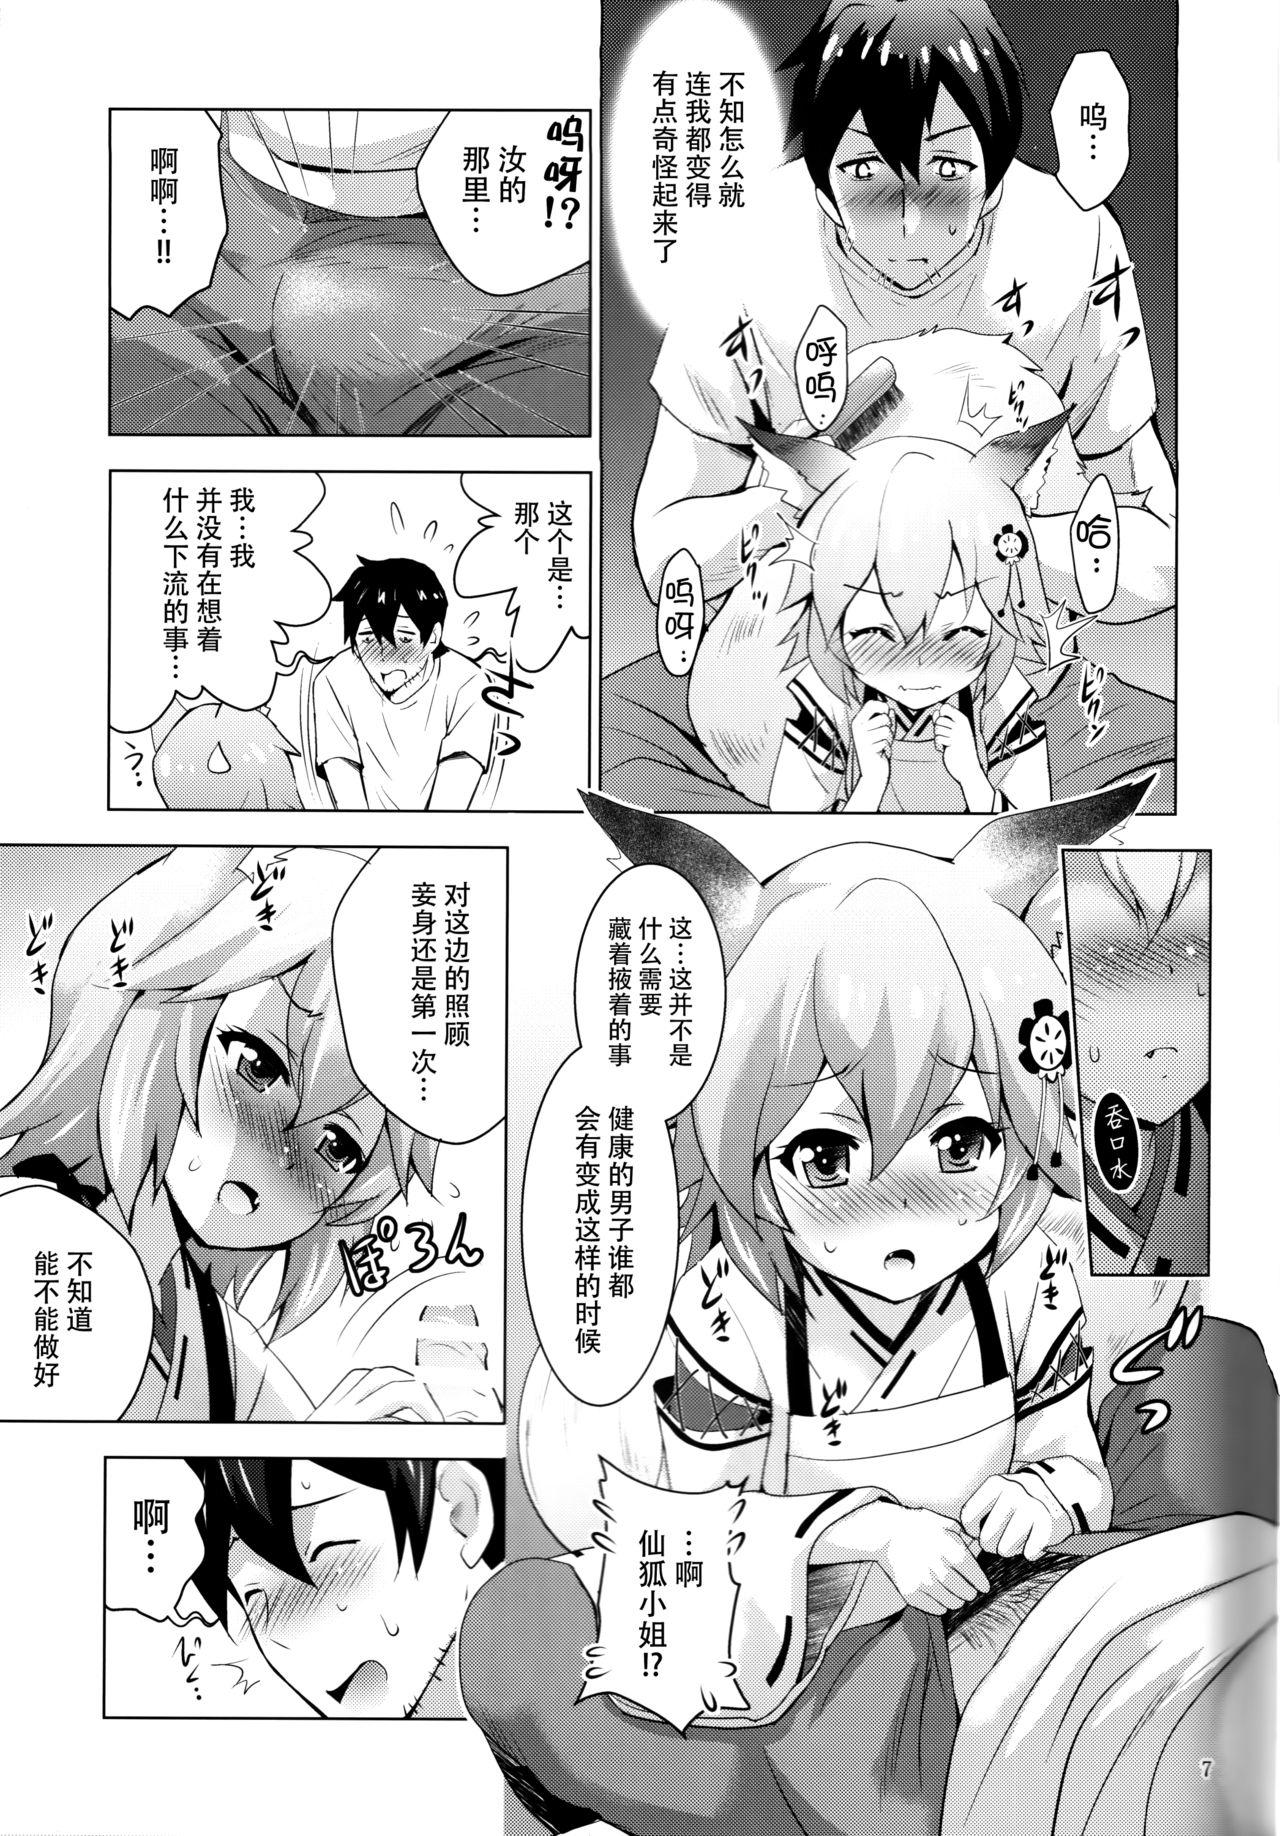 Foreplay MOUSOU Mini Theater 43 - Sewayaki kitsune no senko san Nipple - Page 7